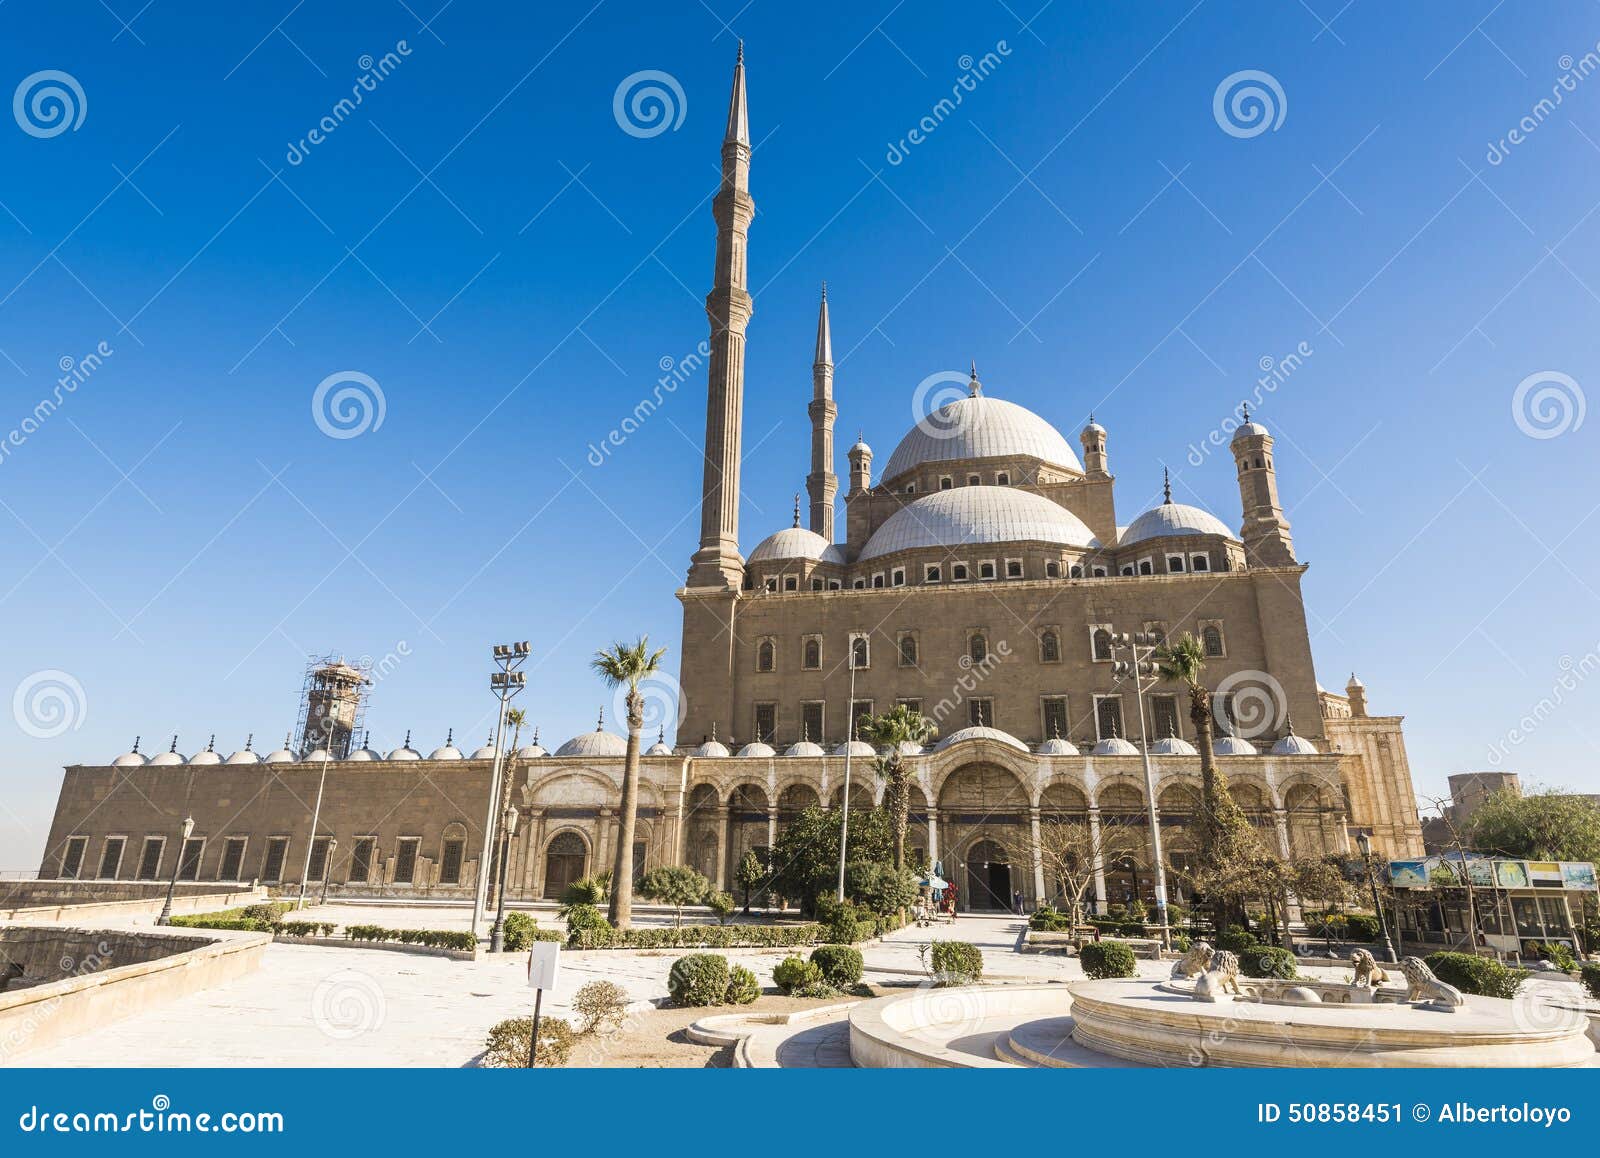 mosque of muhammad ali, saladin citadel of cairo (egypt)